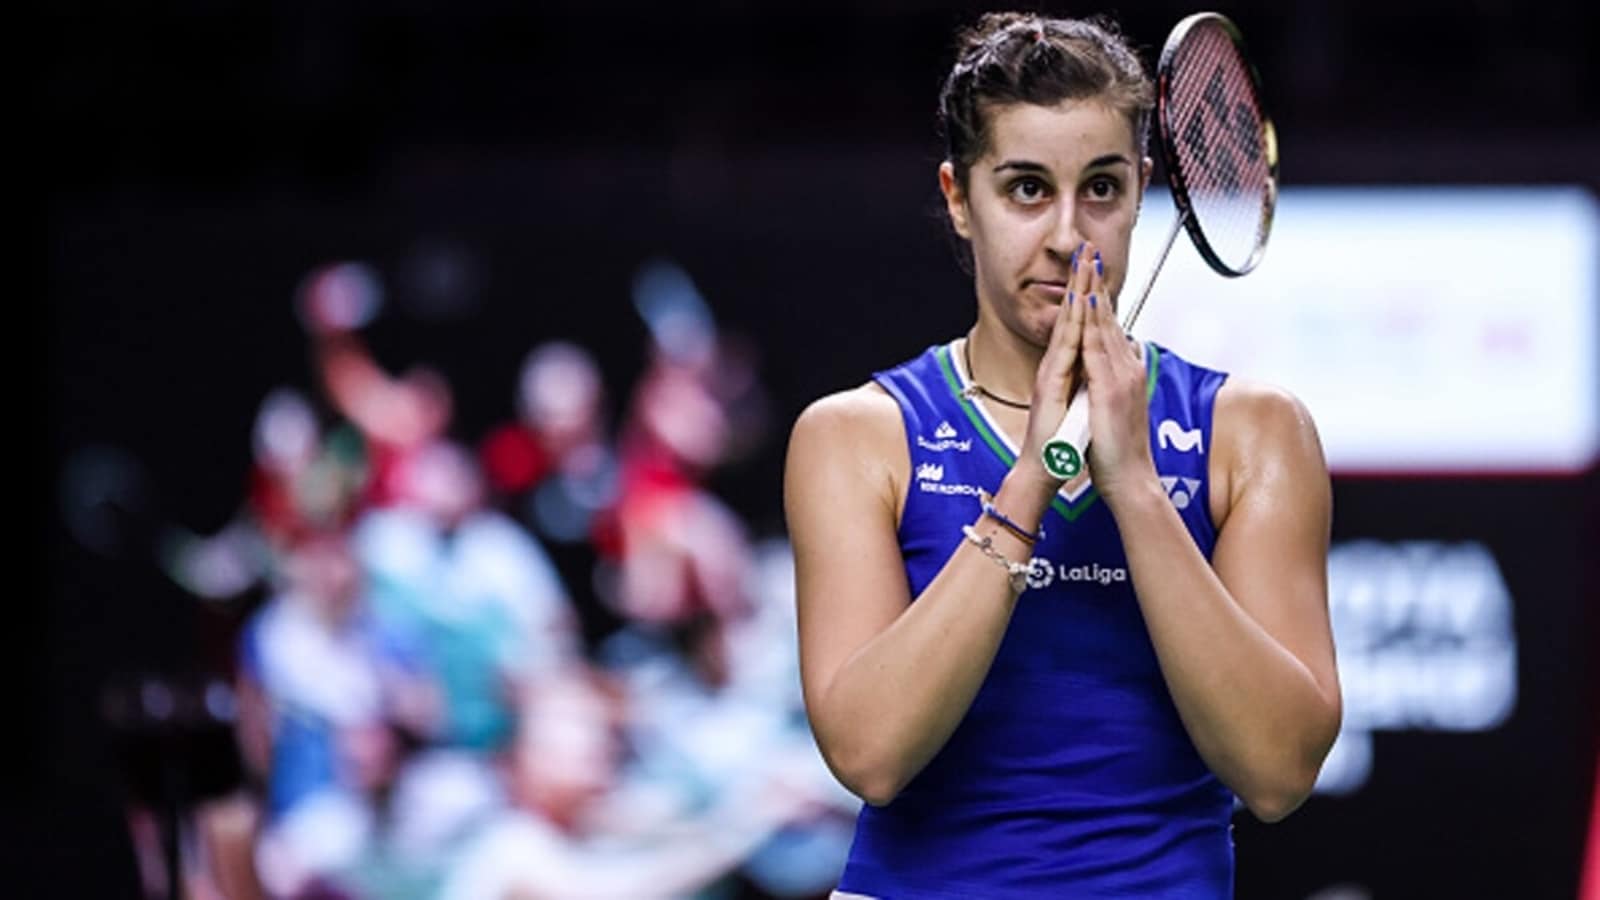 Carolina Marin pulls out of World Championships - Hindustan Times female